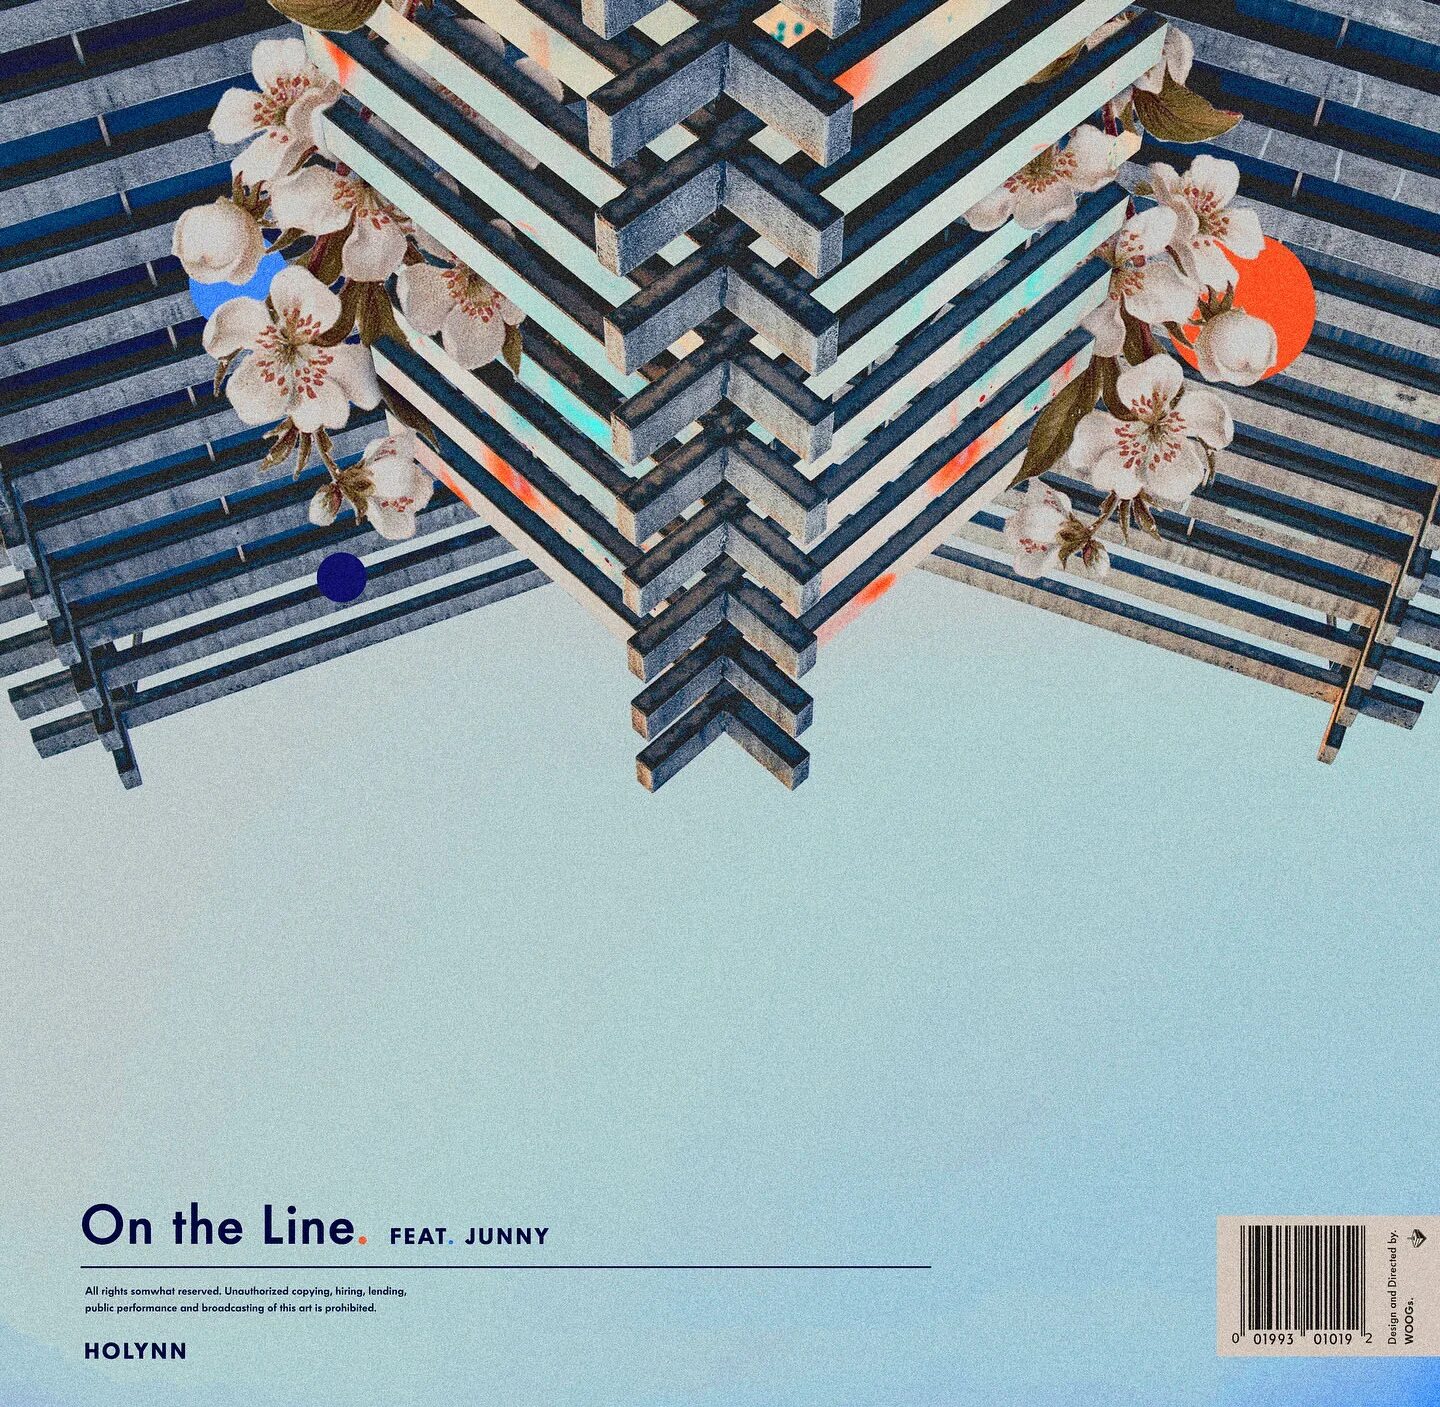 Out of line песня merrily. On the line песня. Lines песня. Junny Interior Single. Junny Interior album Shazam.